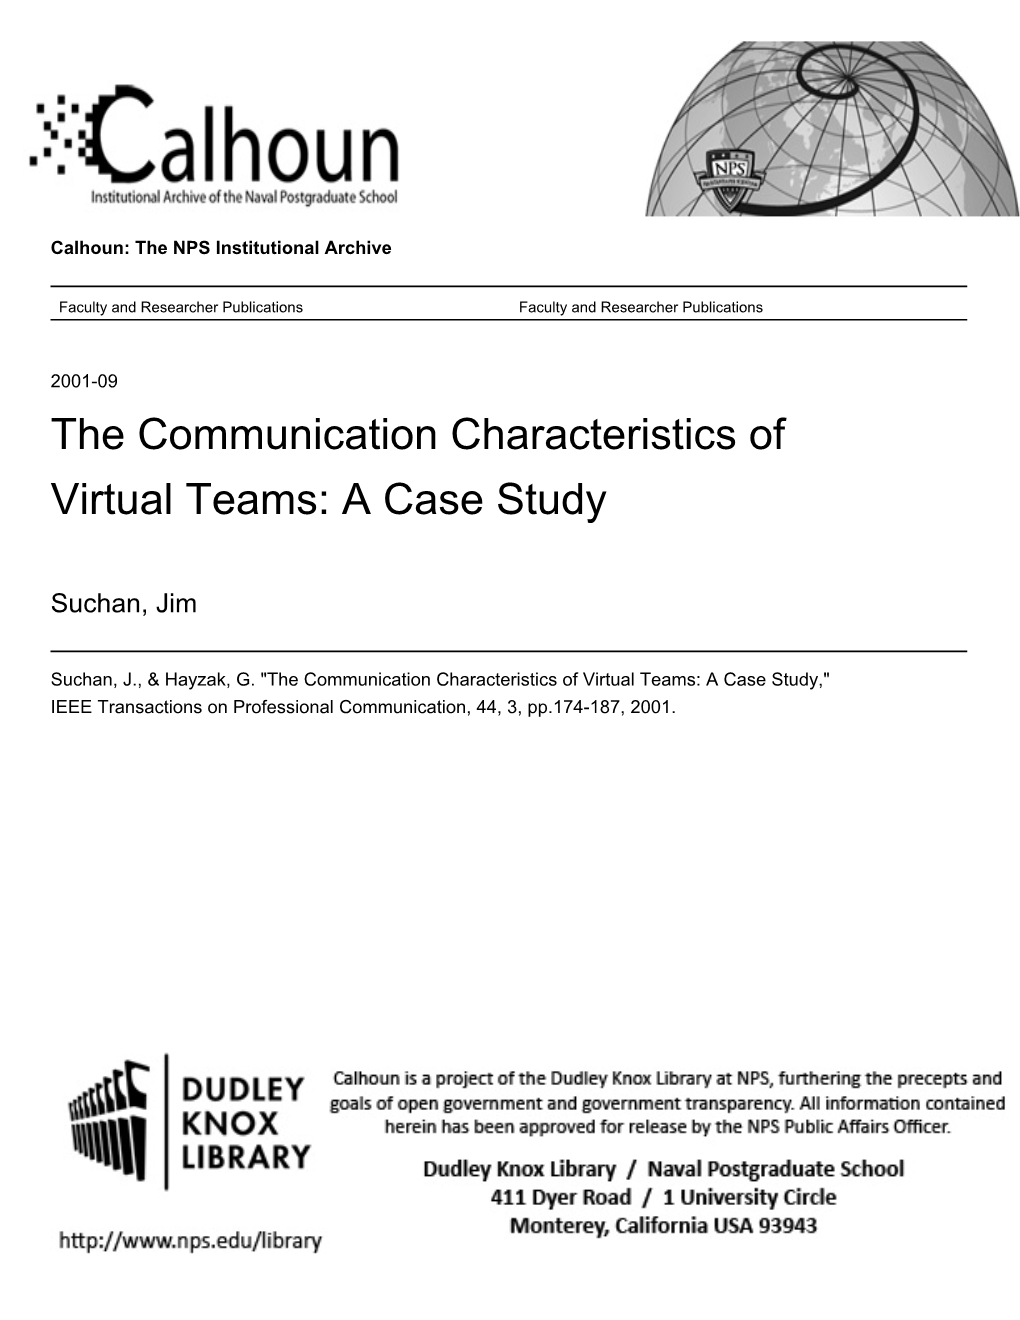 The Communication Characteristics of Virtual Teams: a Case Study